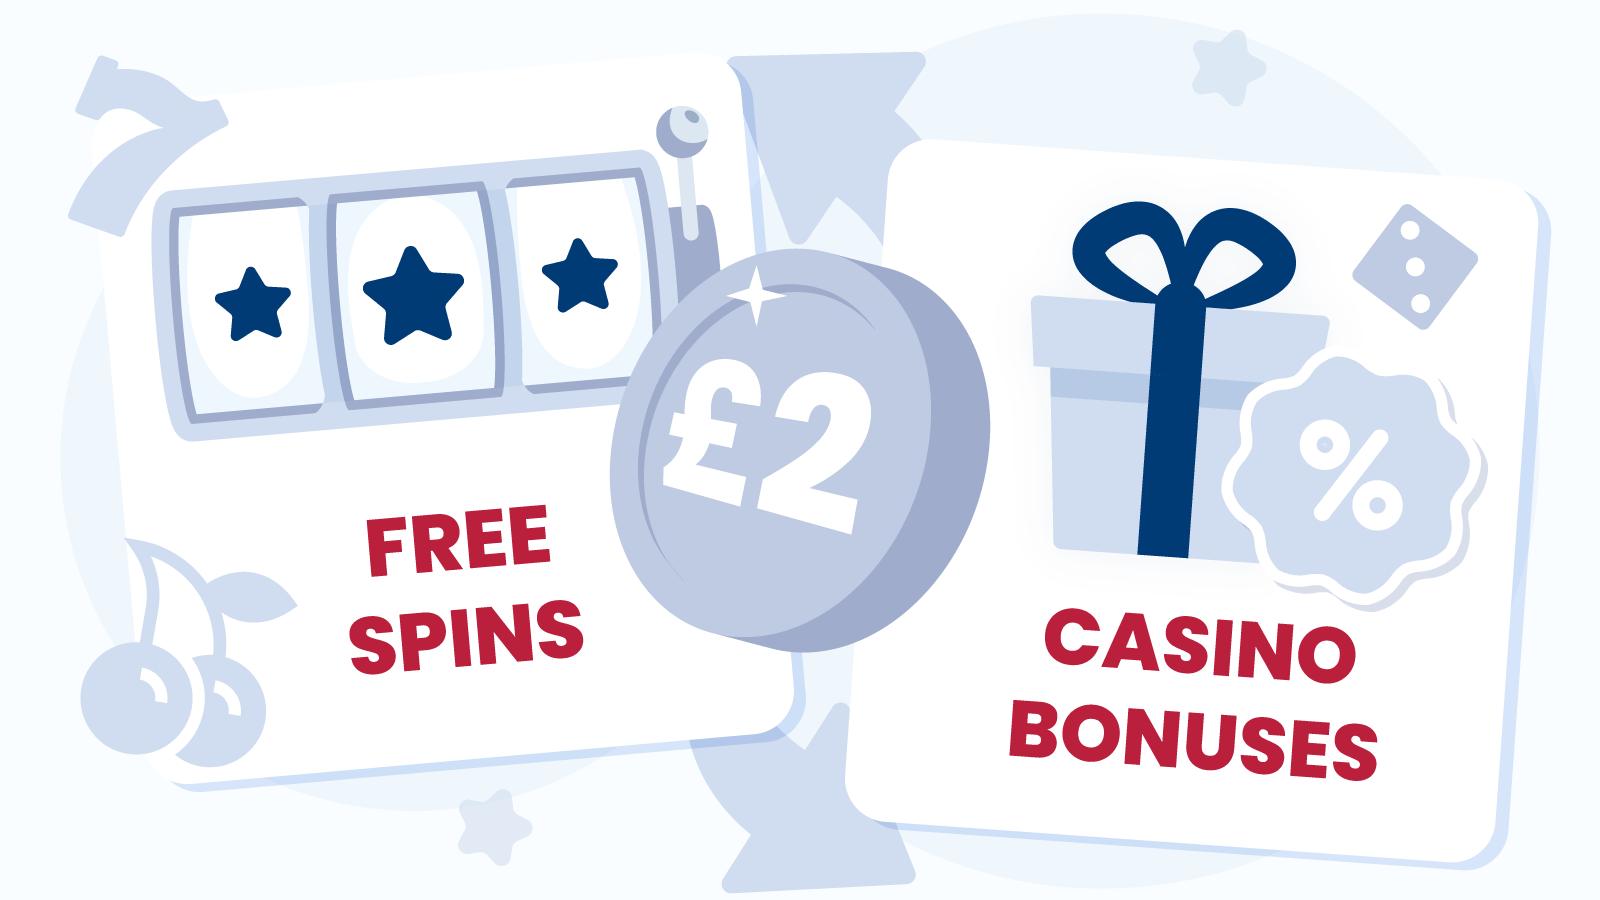 Exclusive £2 Deposit Casino UK Bonuses and Promotions